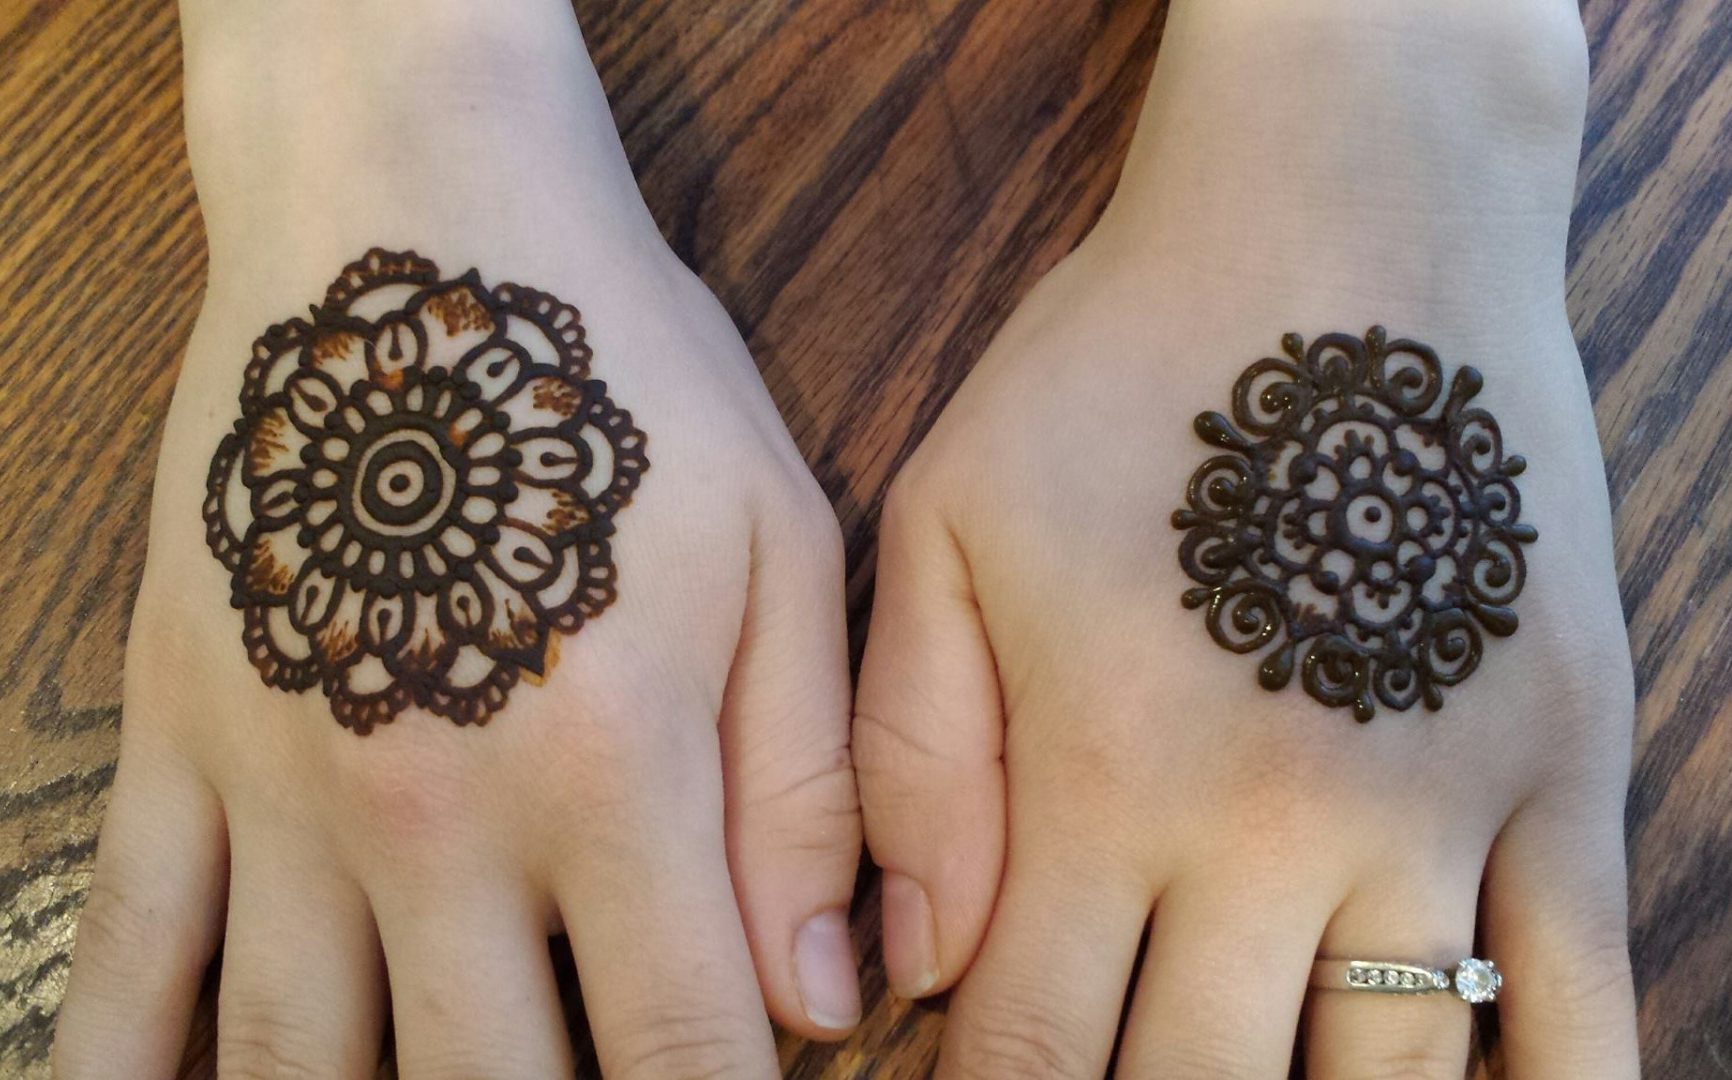 Mandala shaped henna body art on woman's hands.